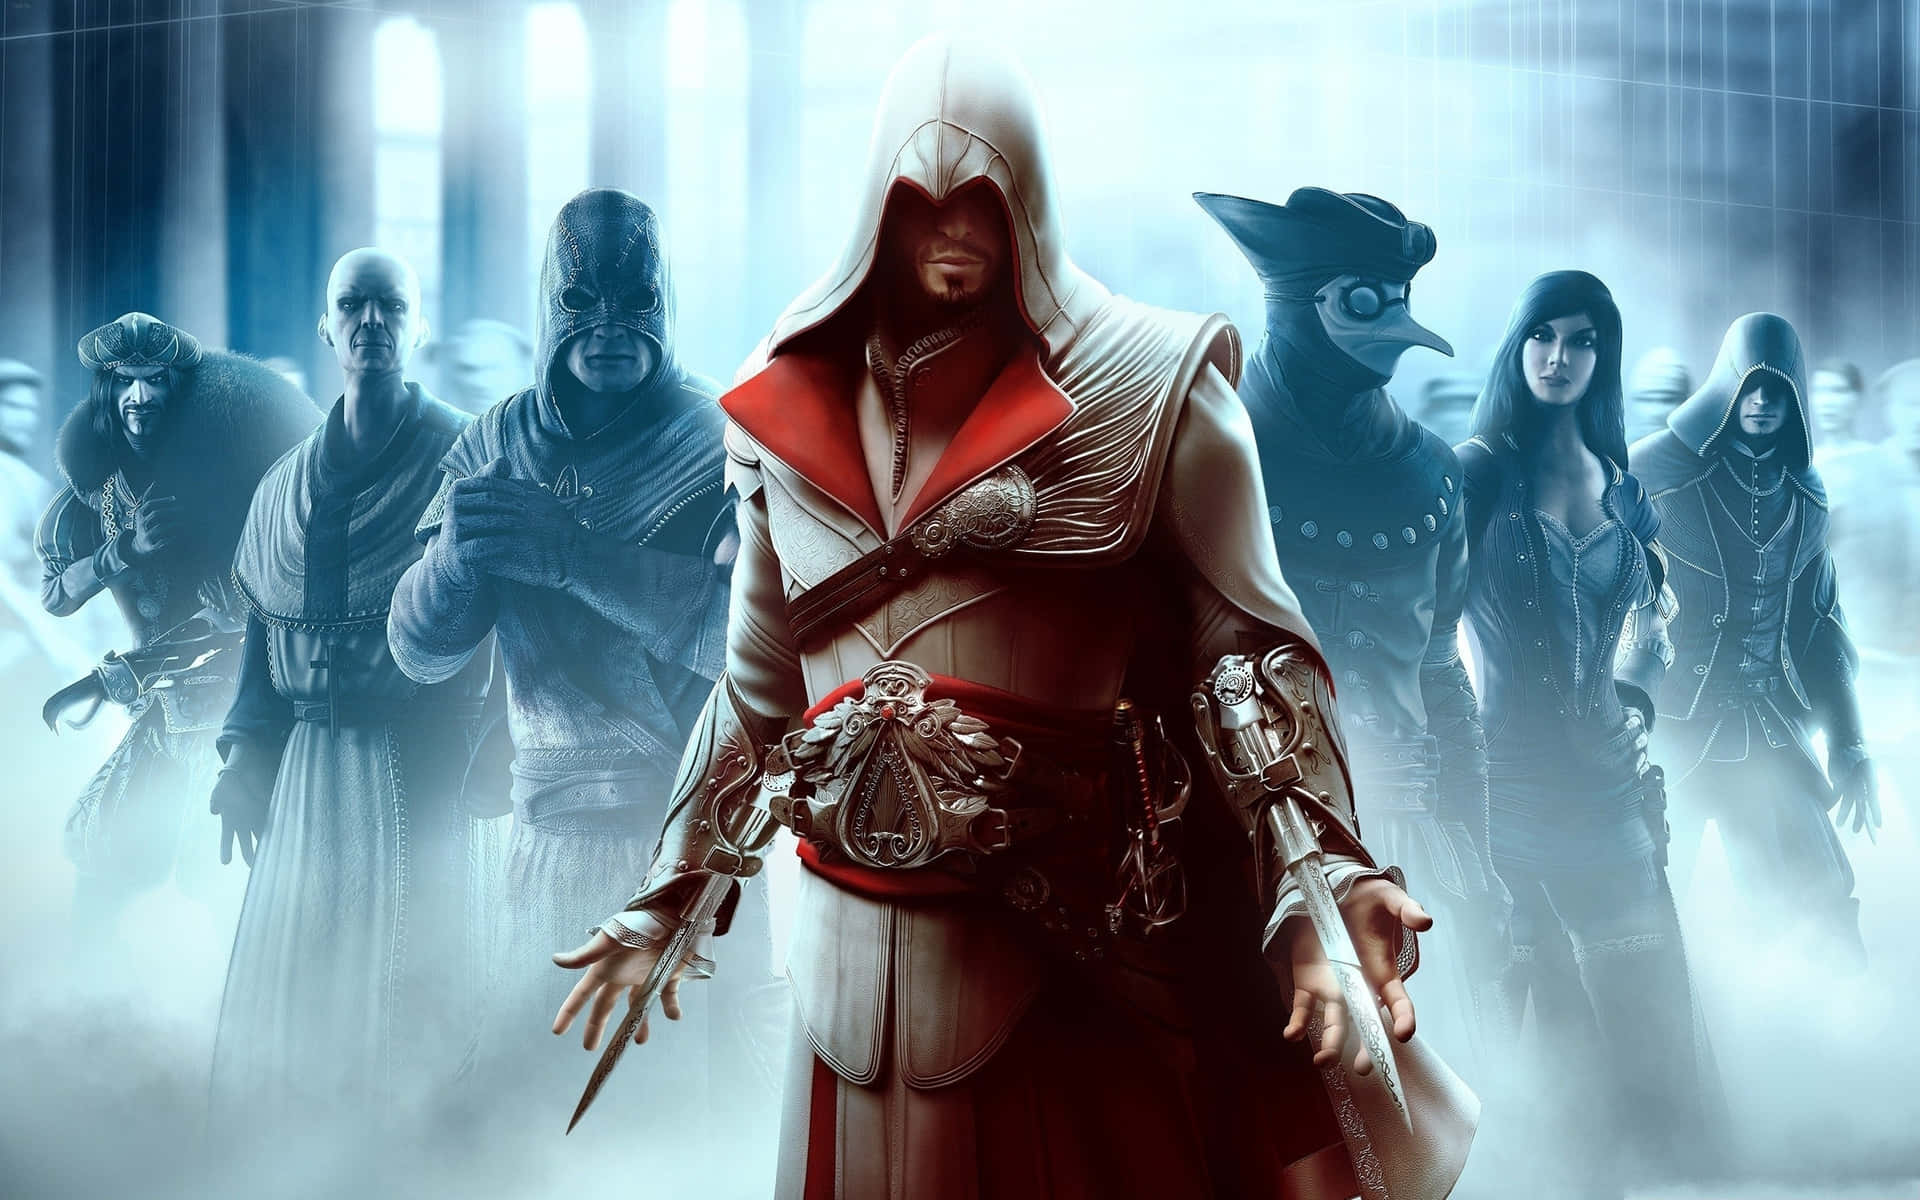 Personajesde Assassin's Creed 2560 X 1600 Fondo De Pantalla. Fondo de pantalla